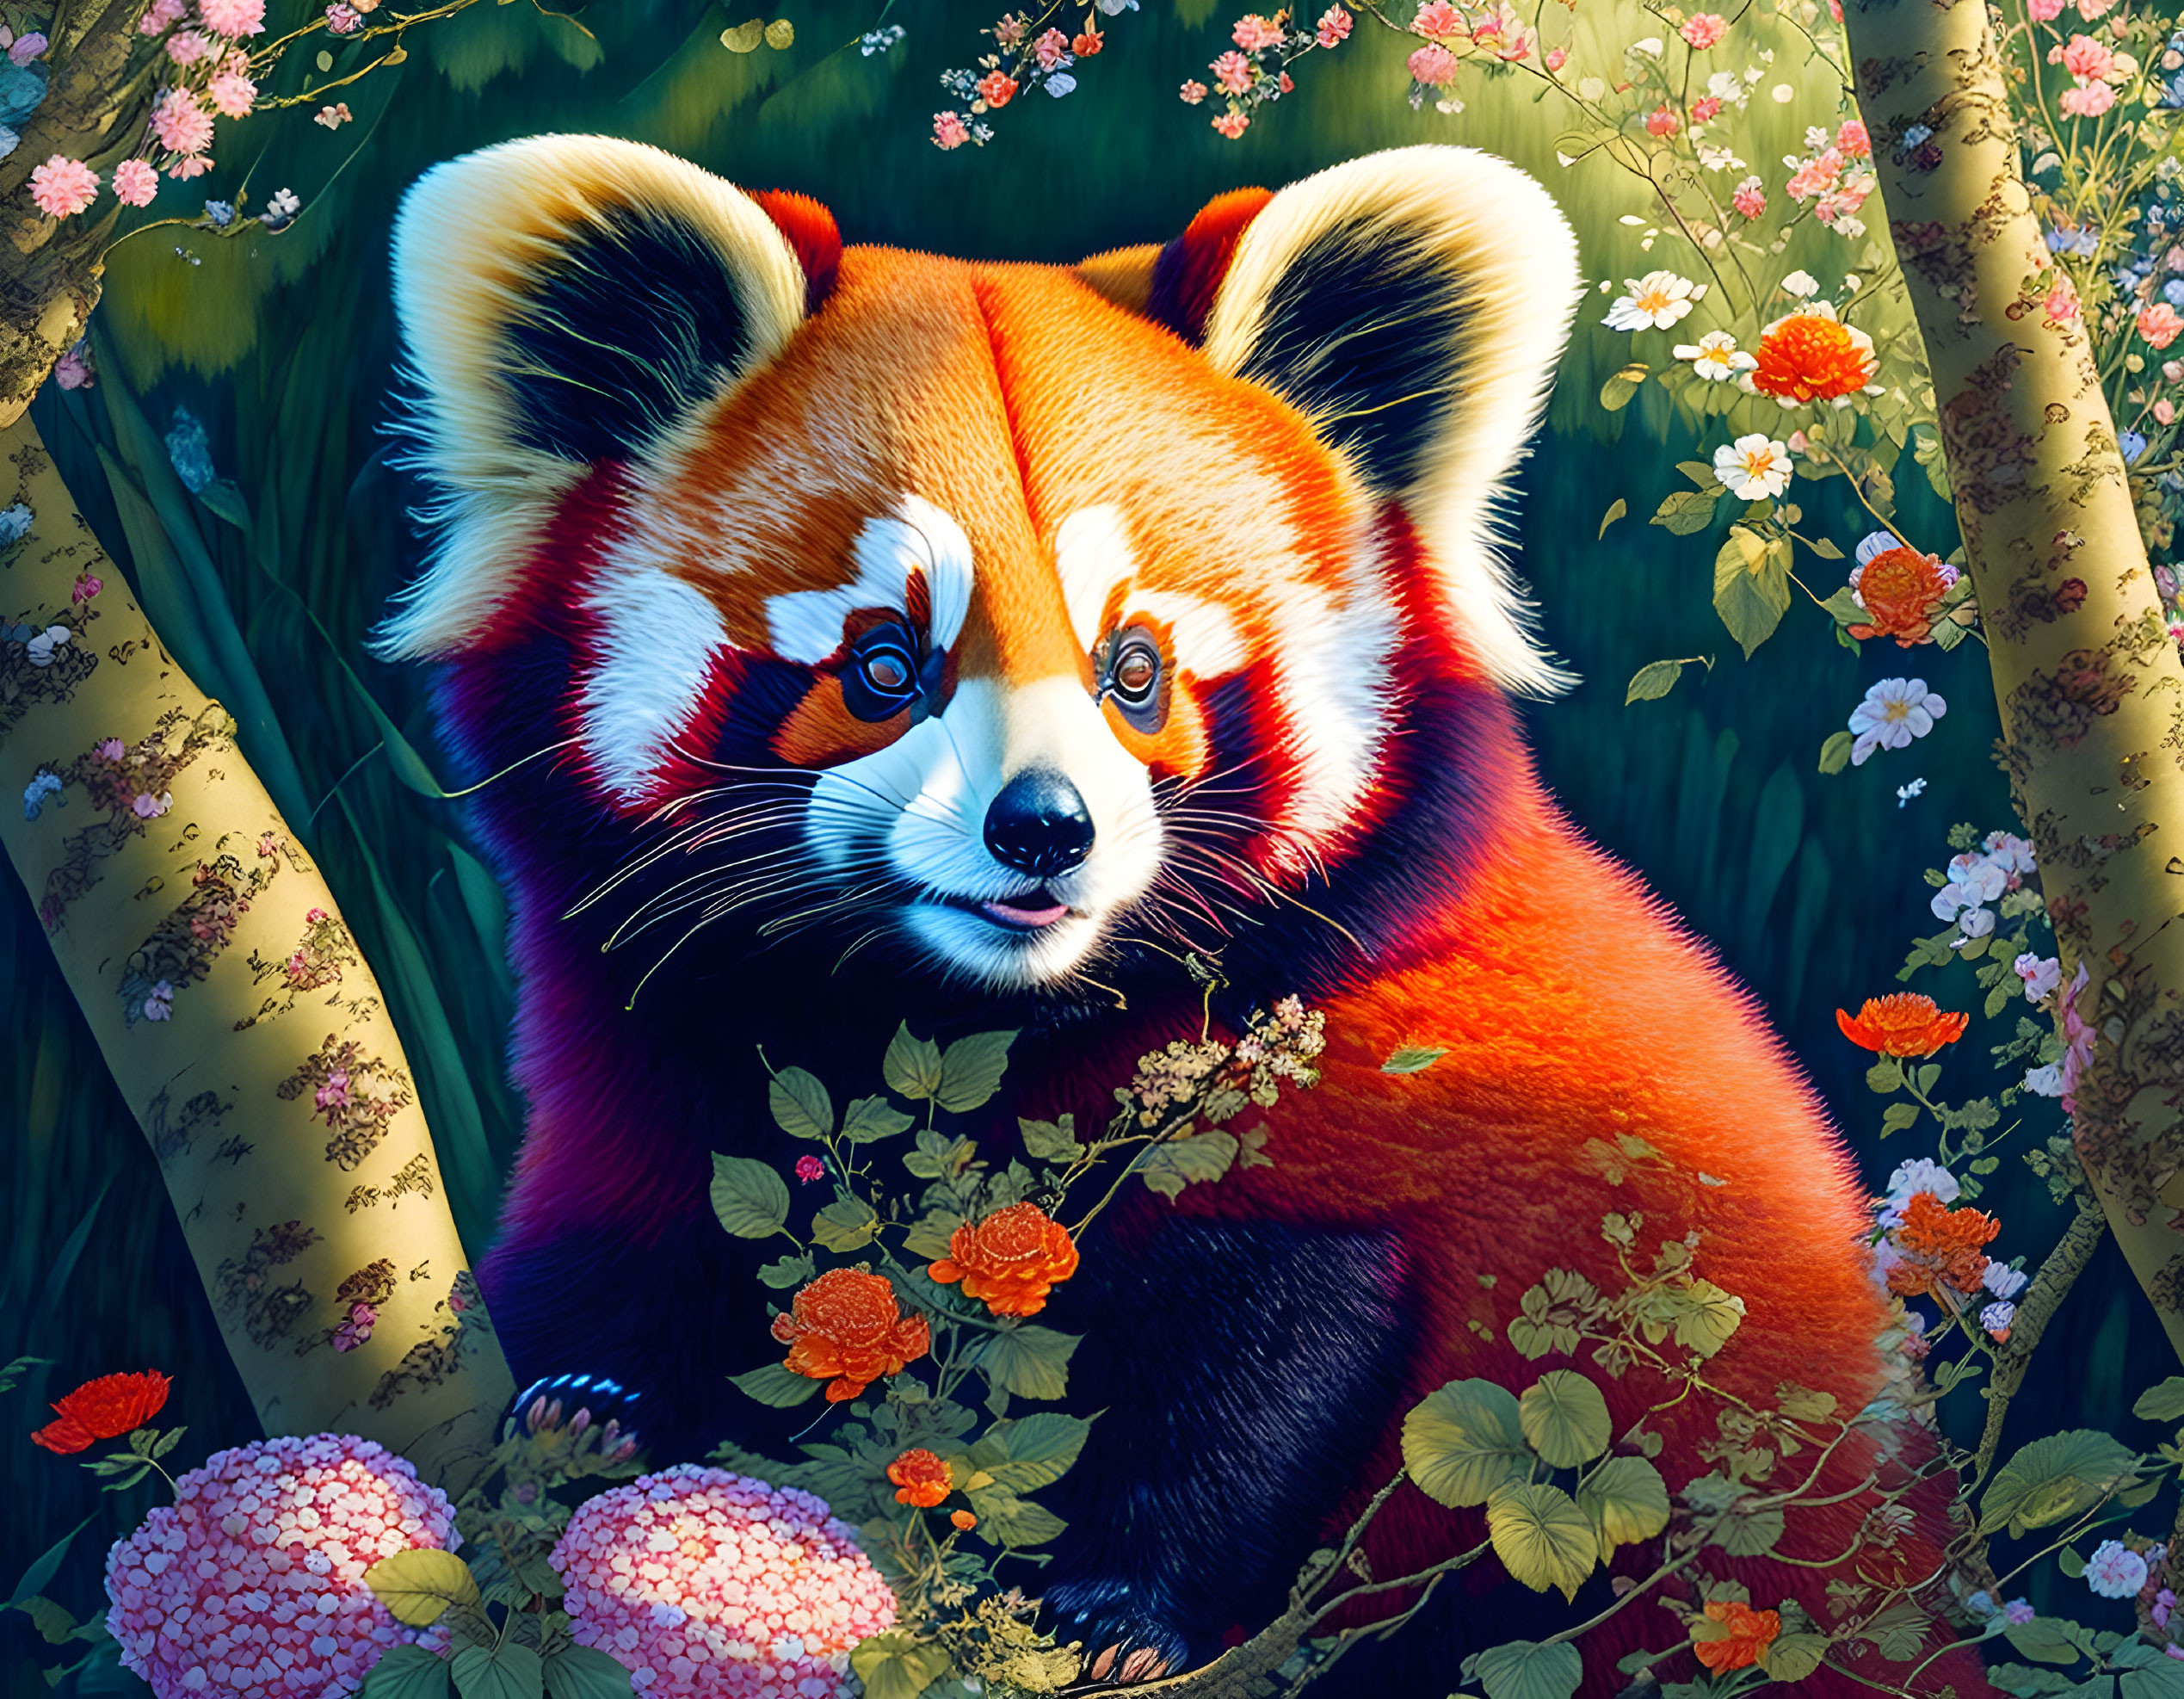 Red Panda in China